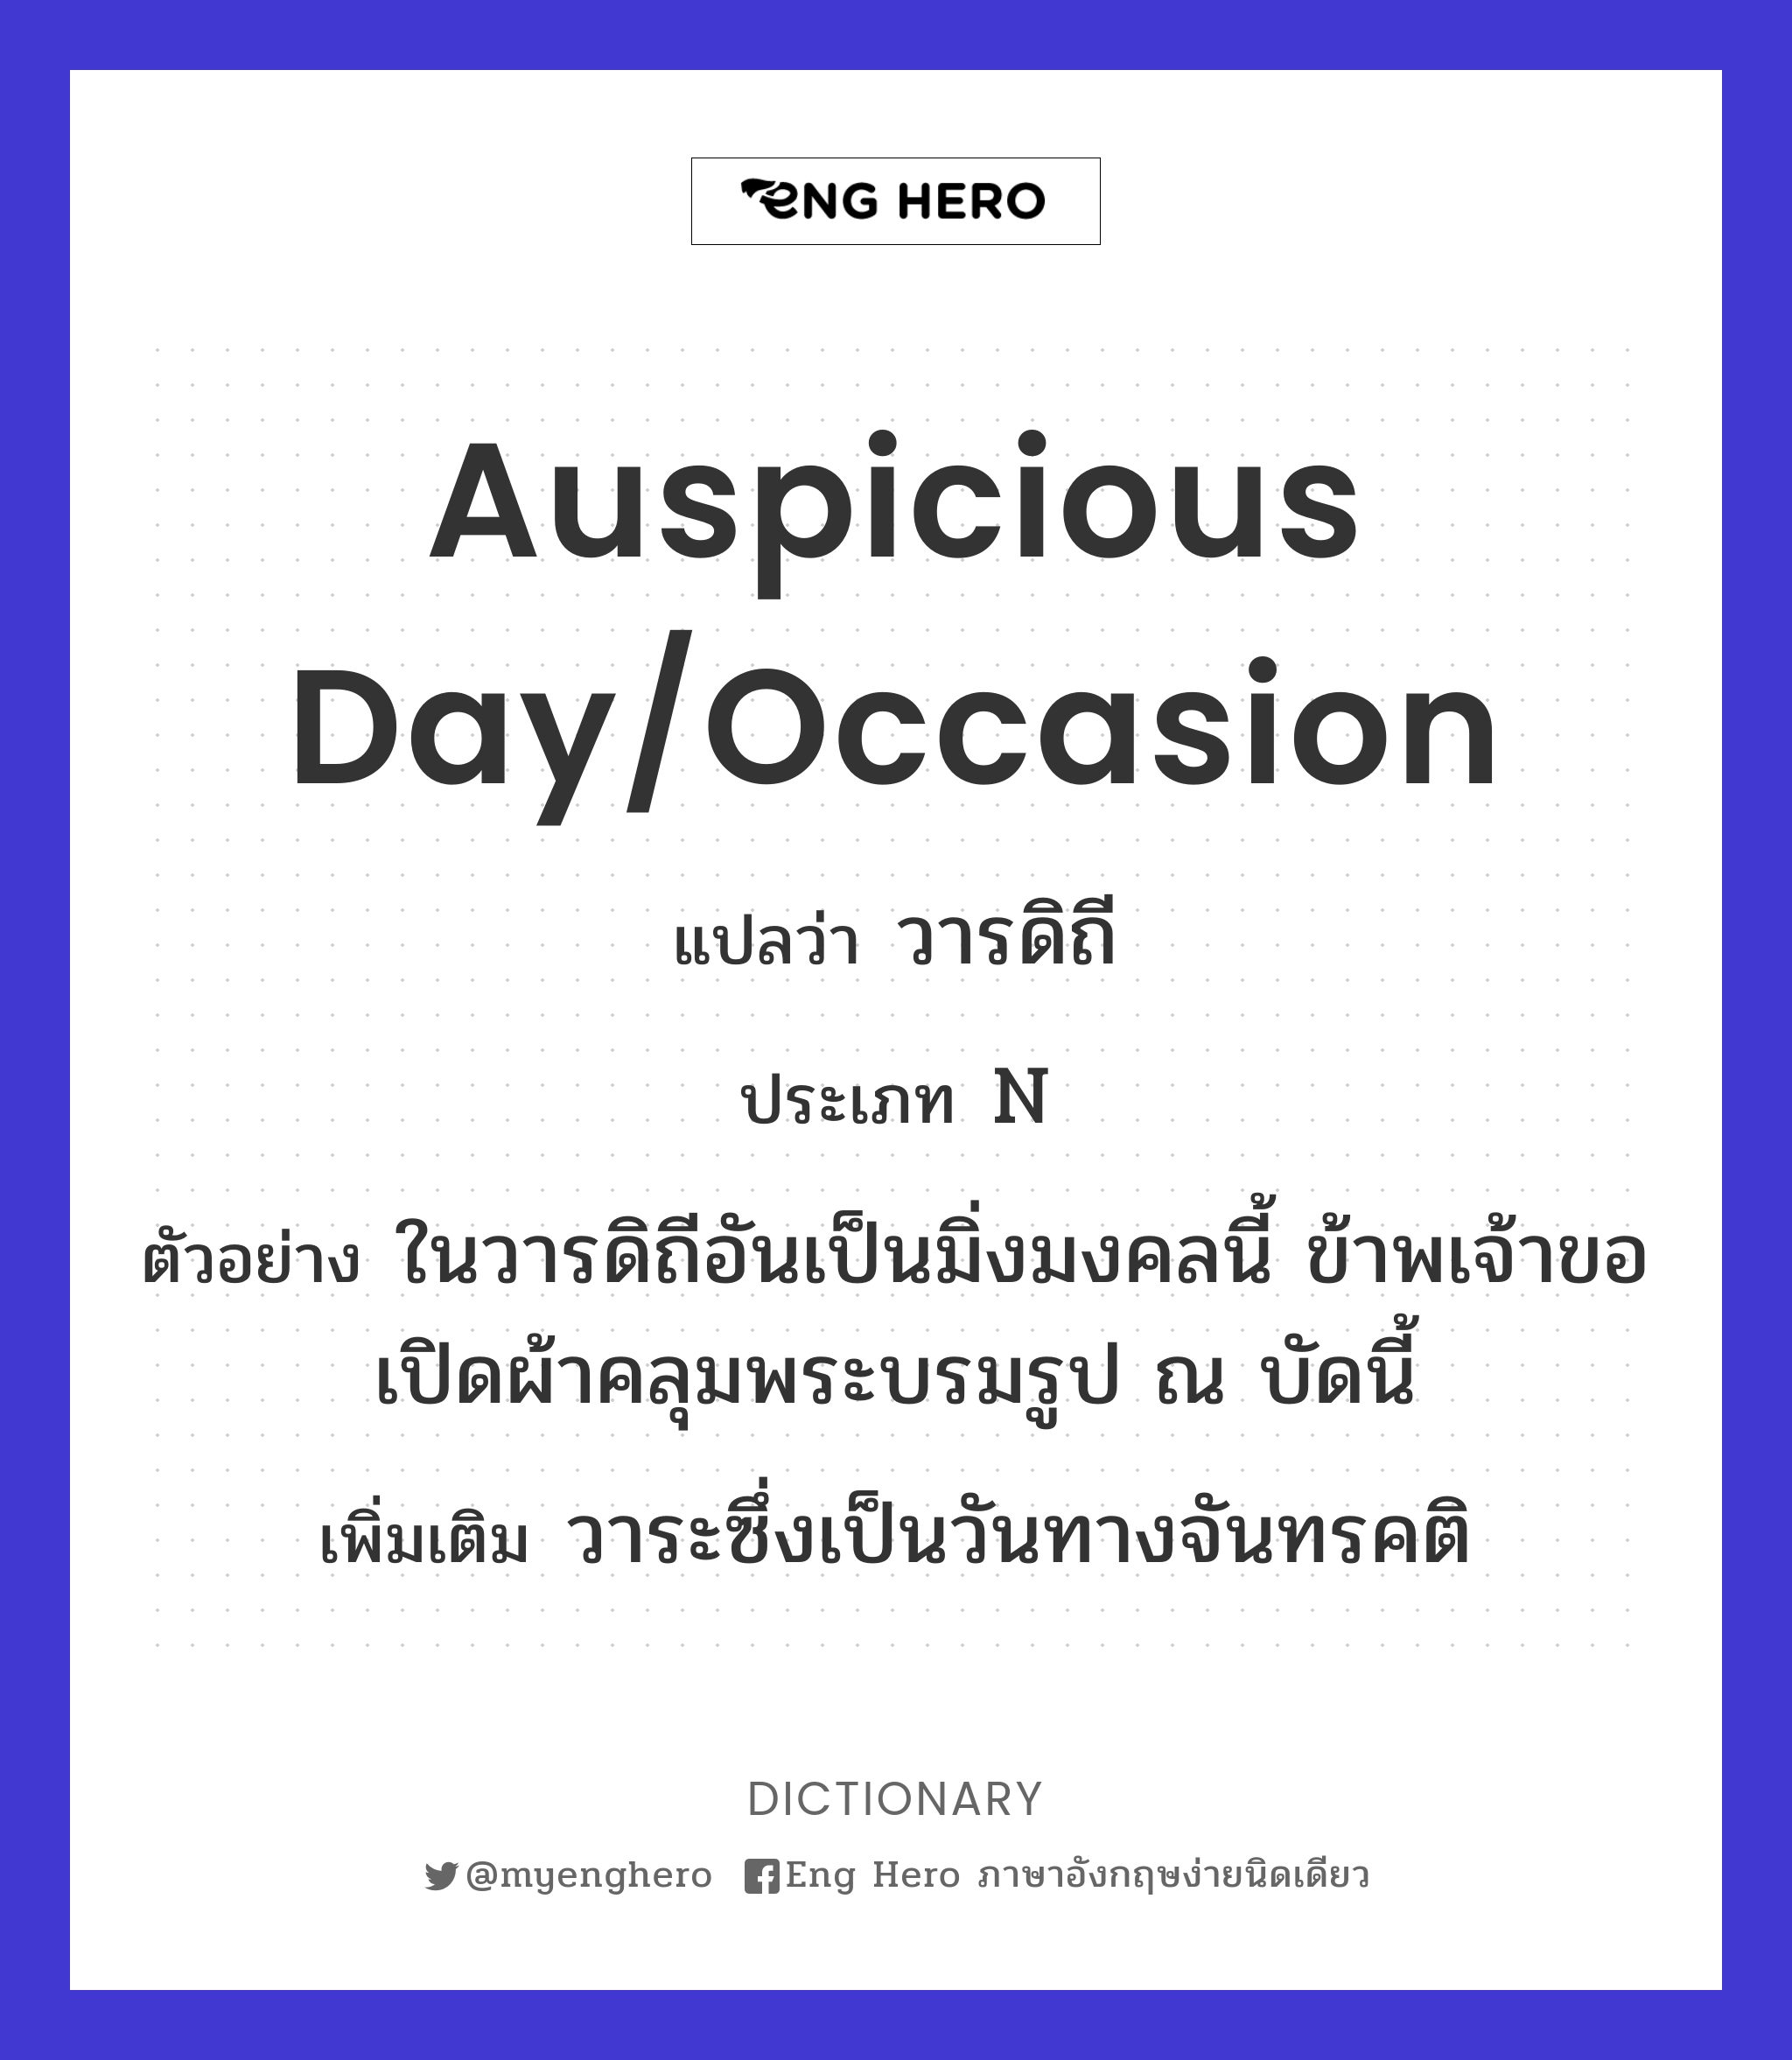 auspicious day/occasion